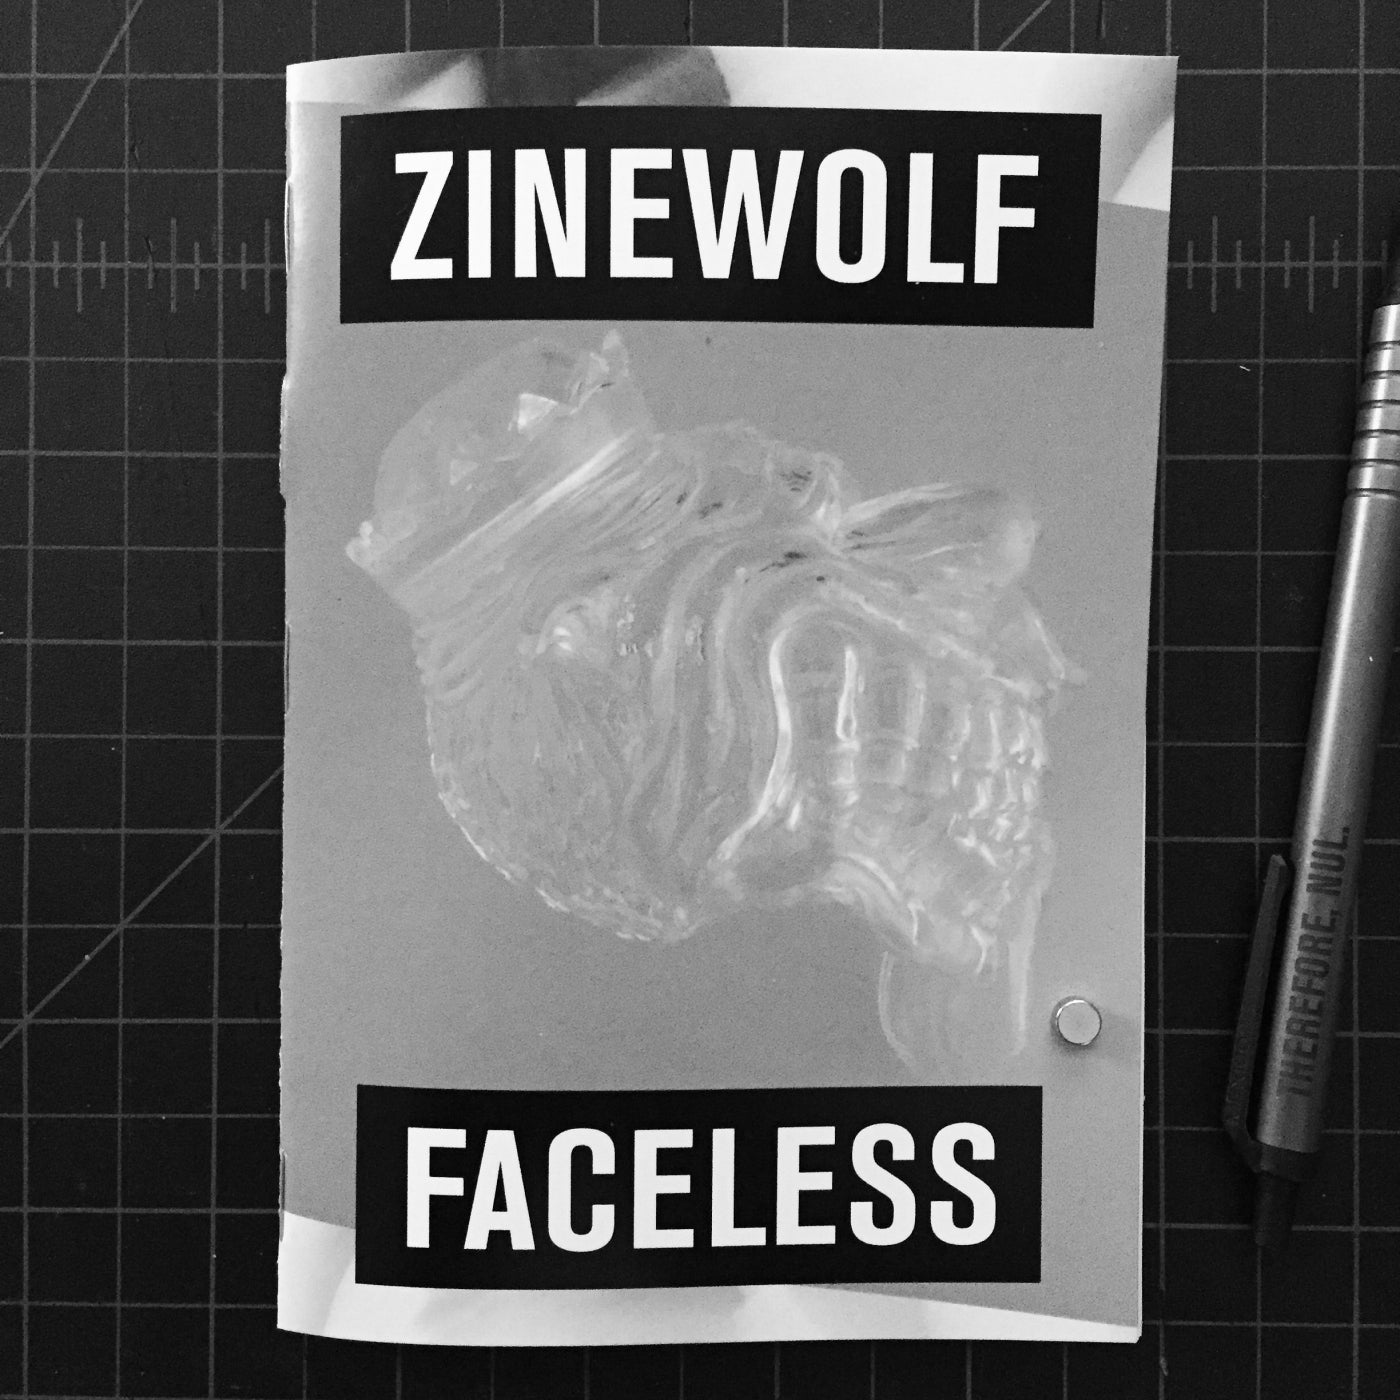 Zinewolf [Faceless]